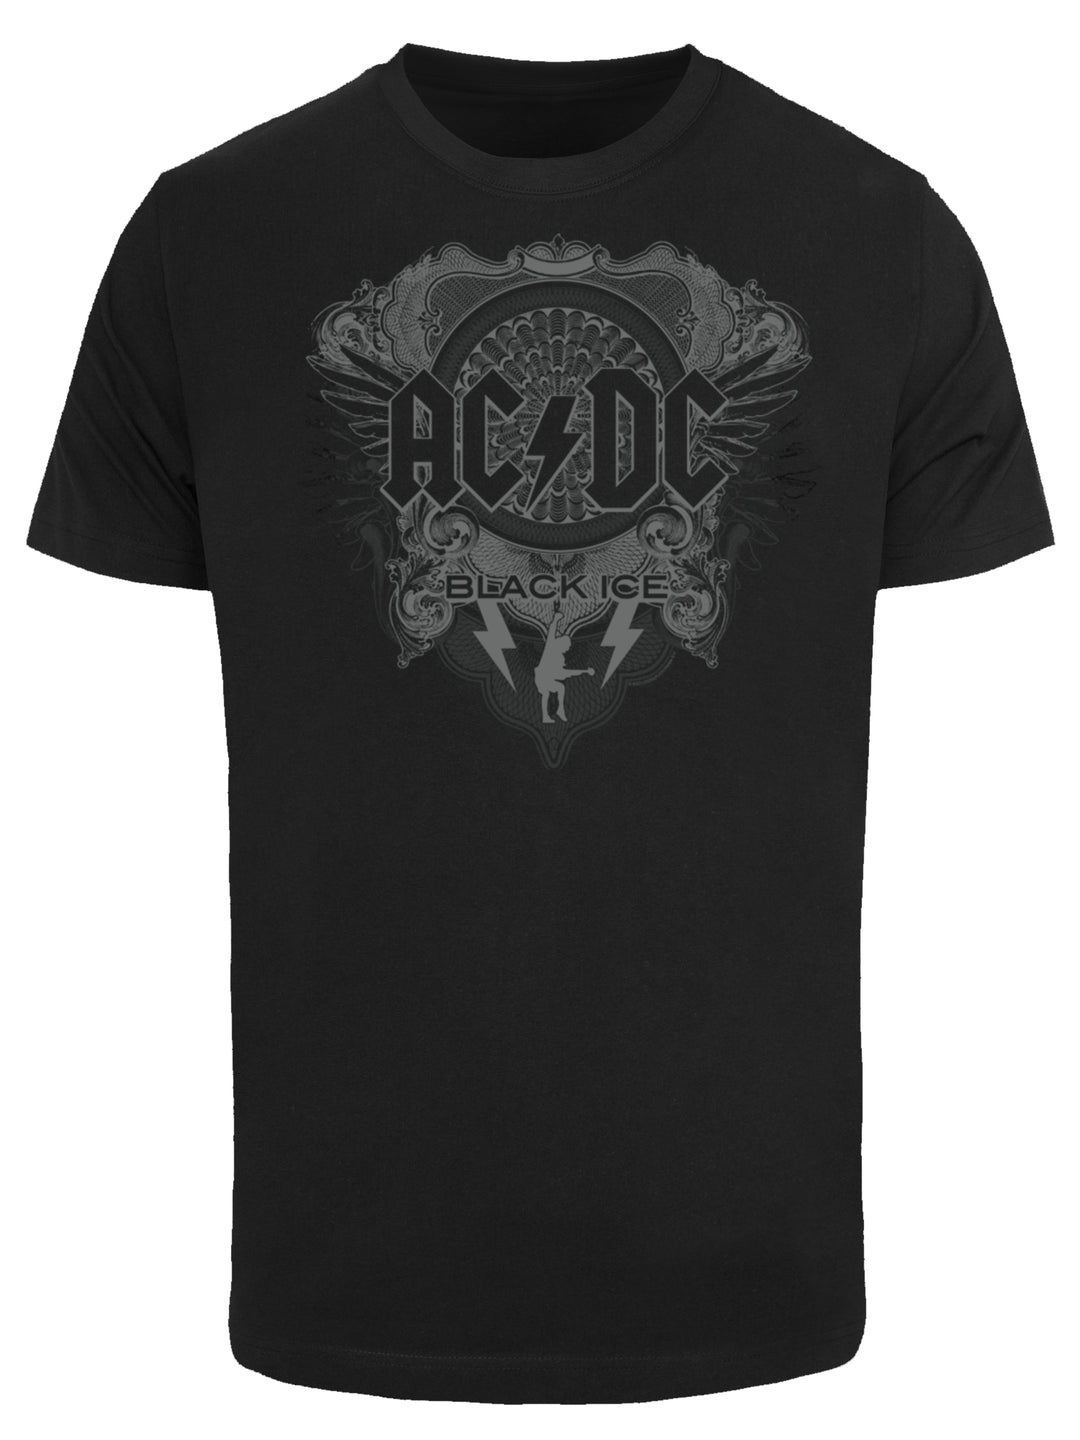 AC/DC Black Ice Round Neck T-Shirt - Showcase Your Rock Spirit in Comfort & Style